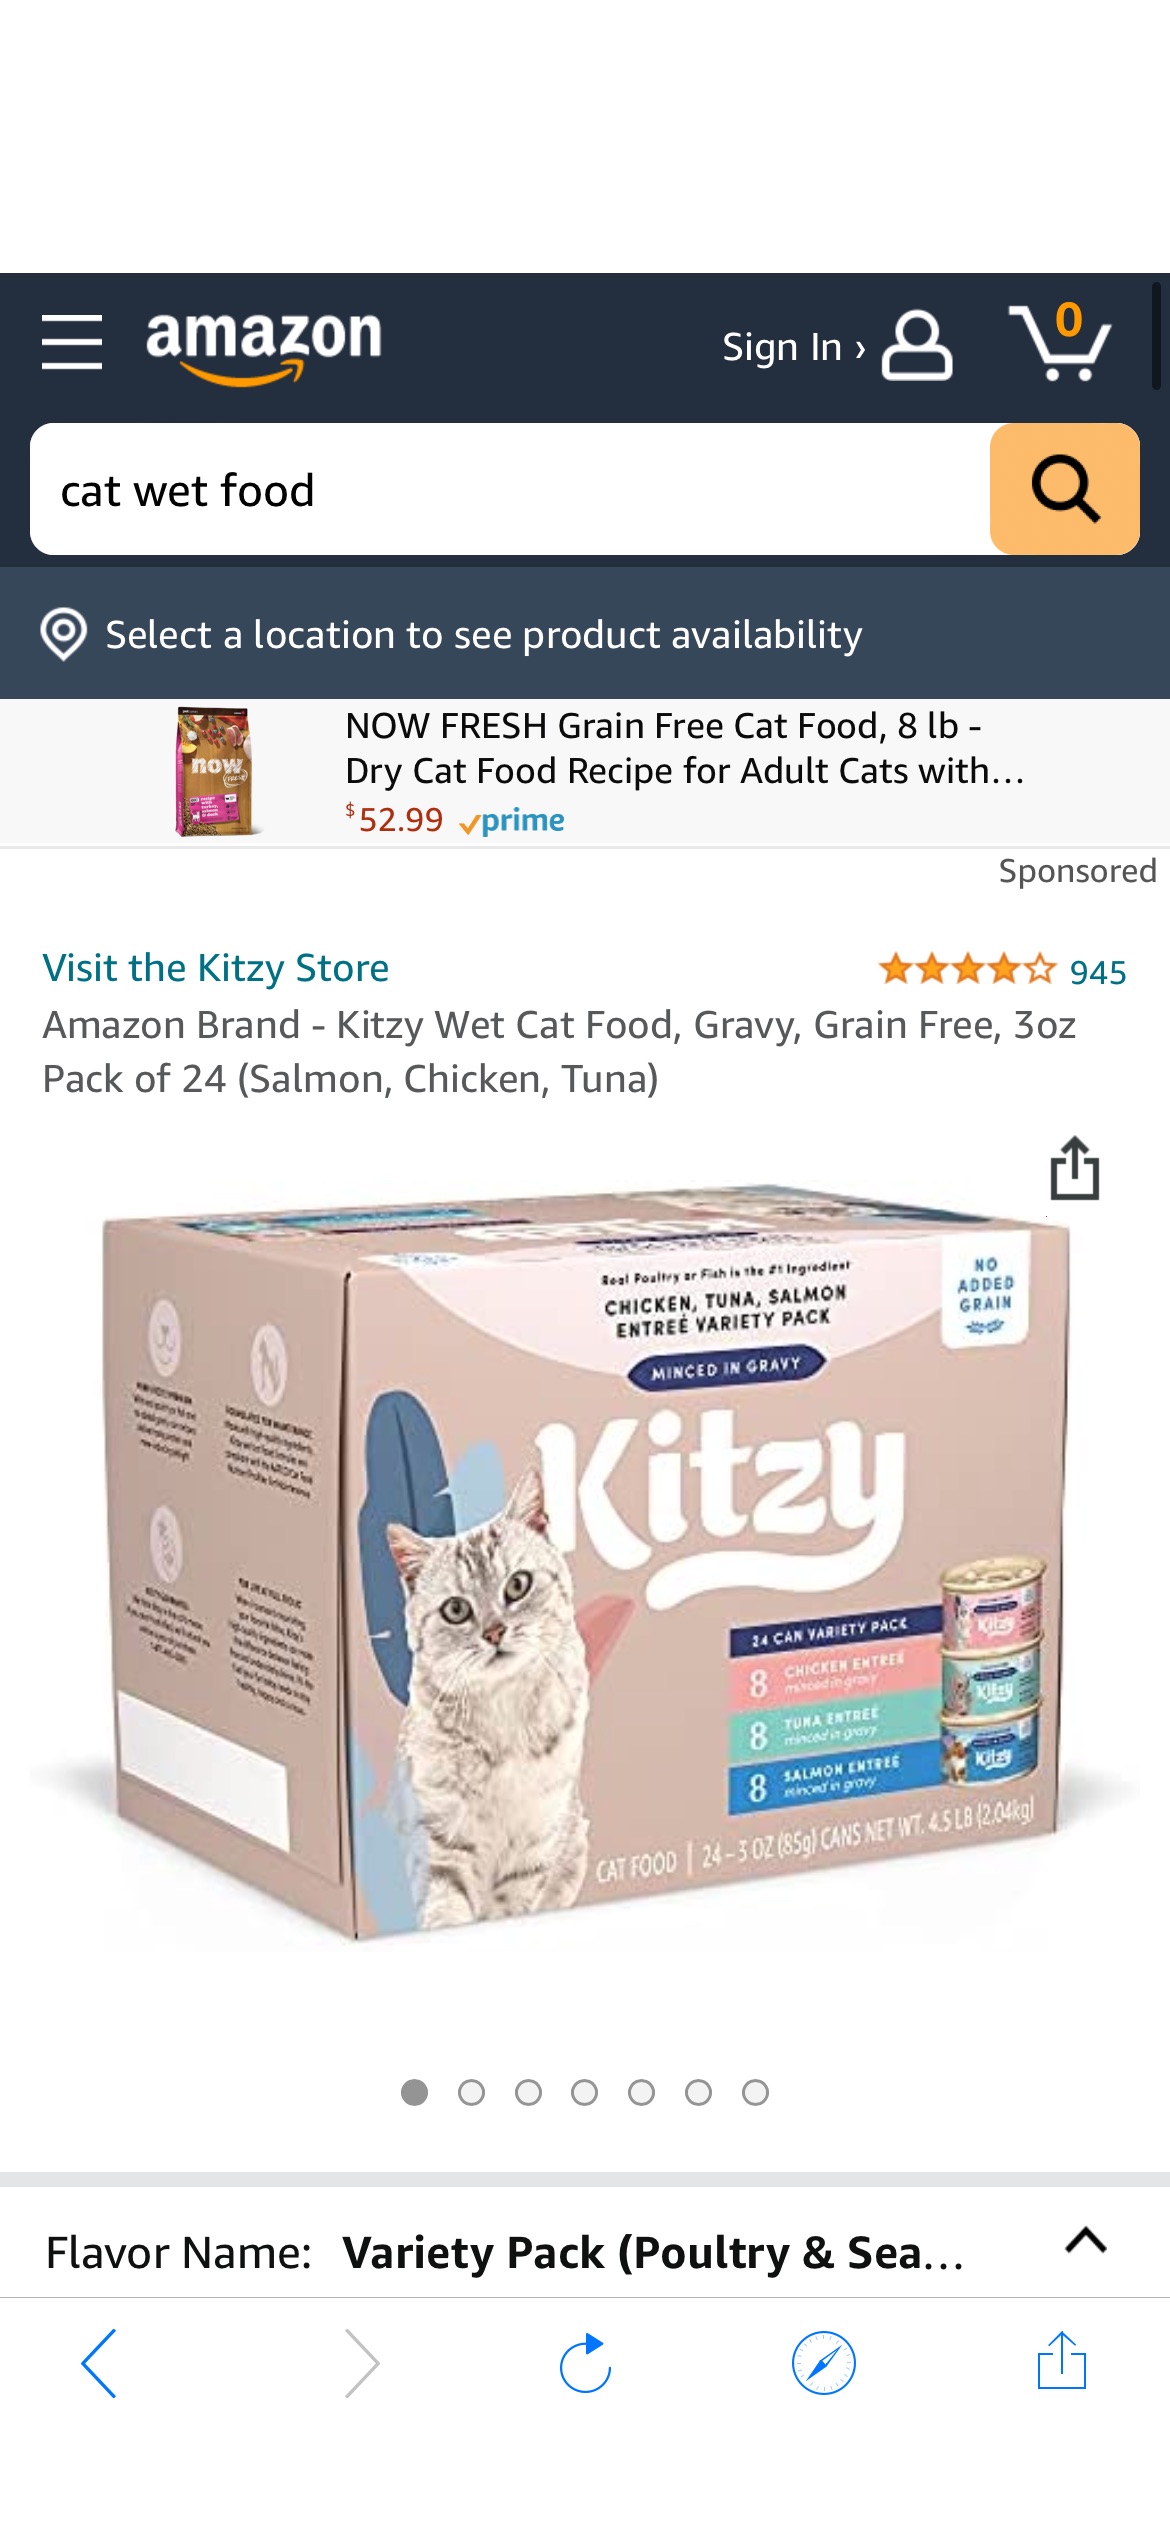 7折优惠。Amazon自营品牌猫罐头Kitzy Wet Cat Food